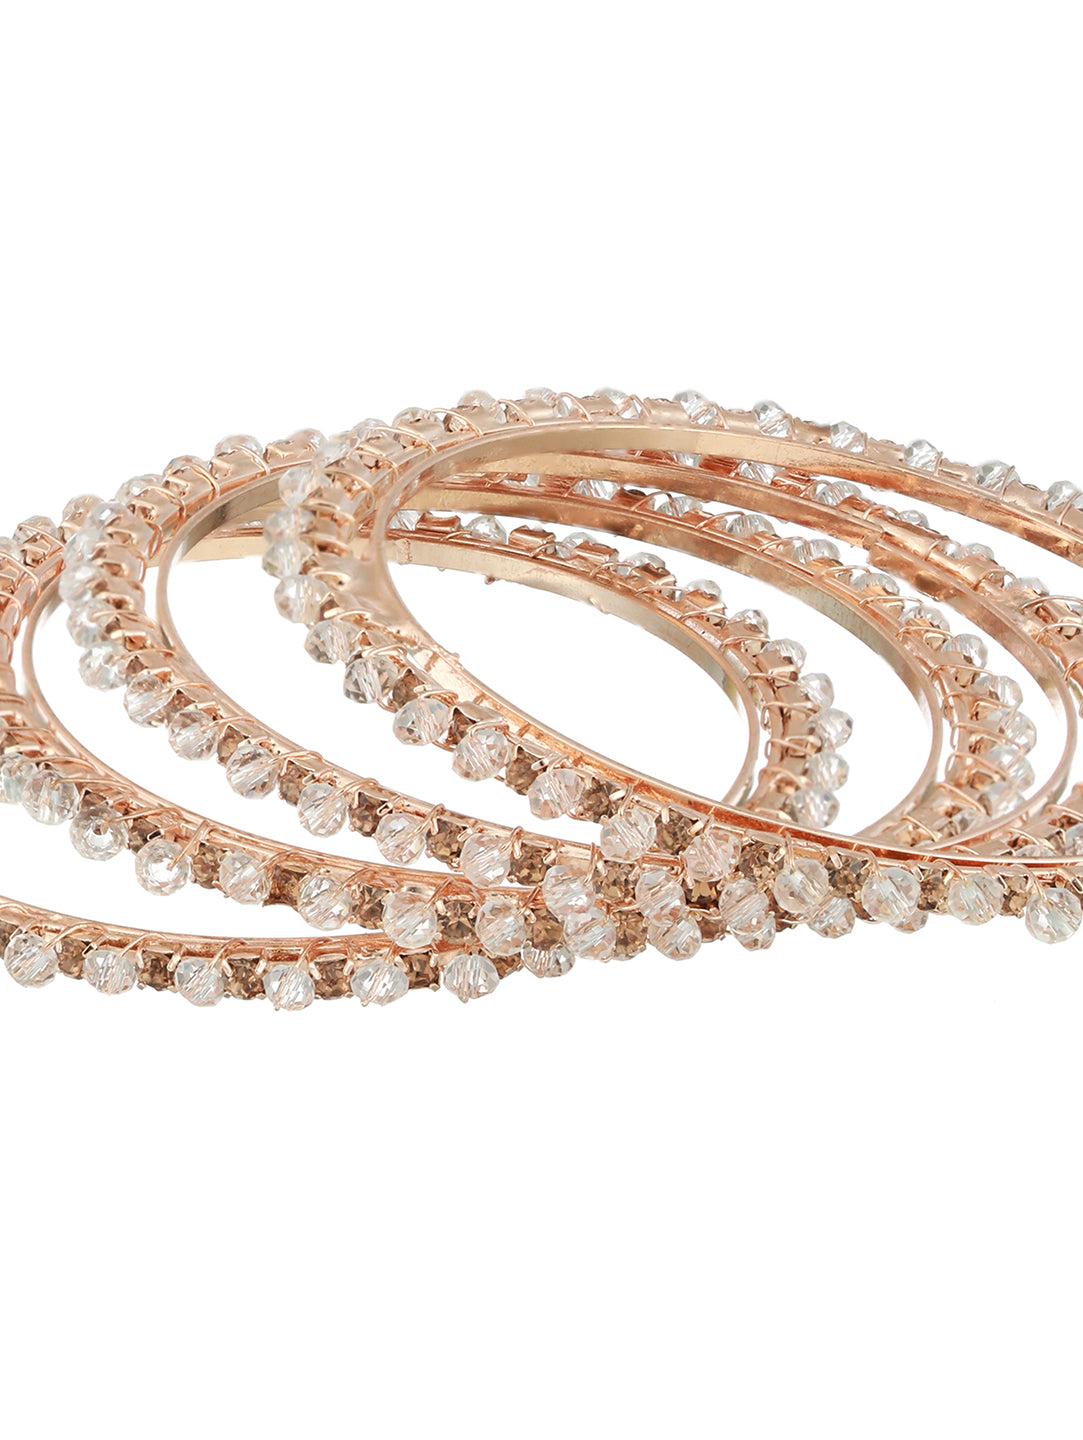 Set of 4 Rose Gold-Plated Crystal Studded Bangles